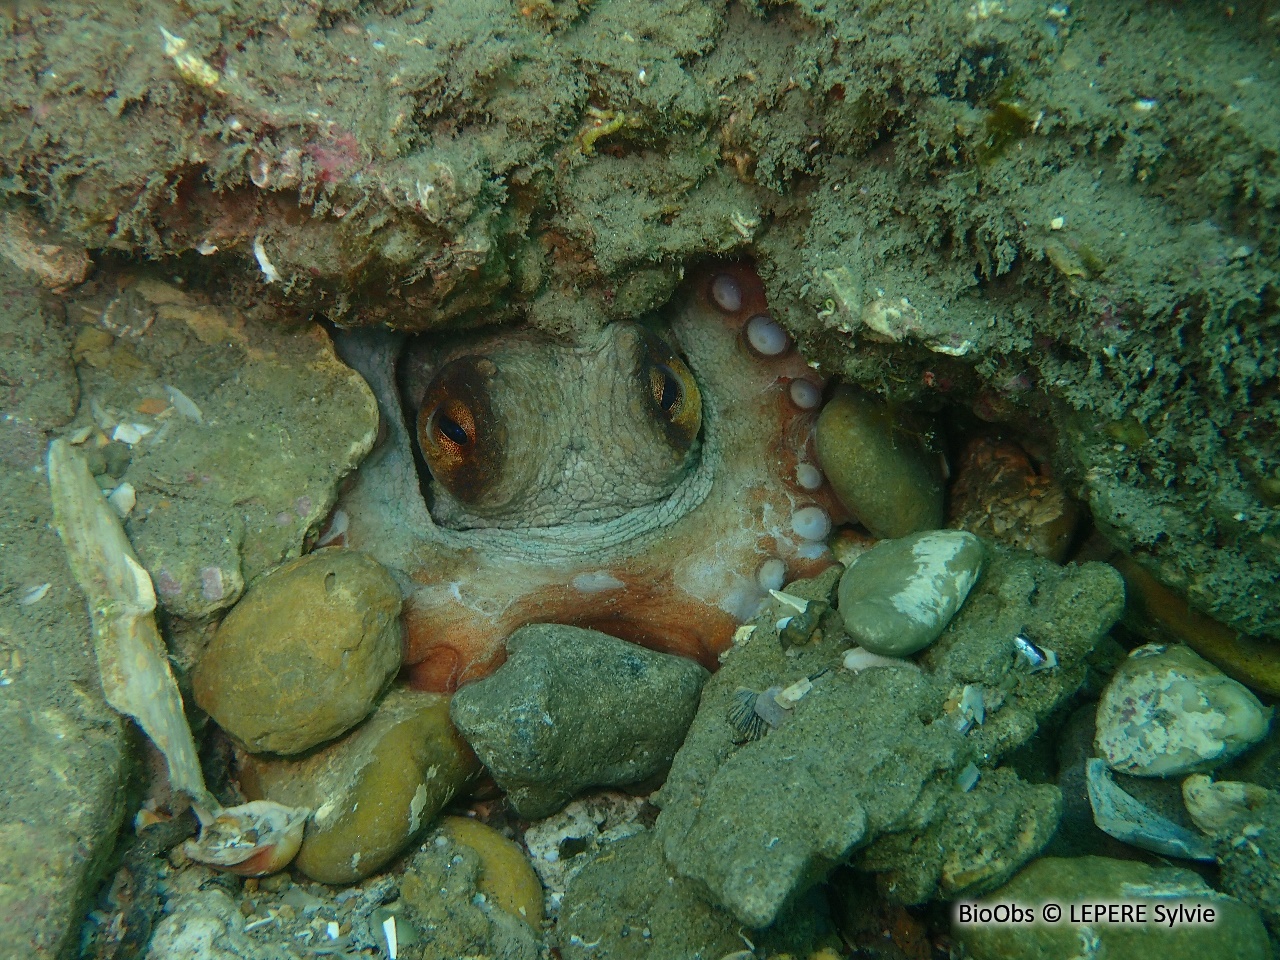 Poulpe commun - Octopus vulgaris - LEPERE Sylvie - BioObs